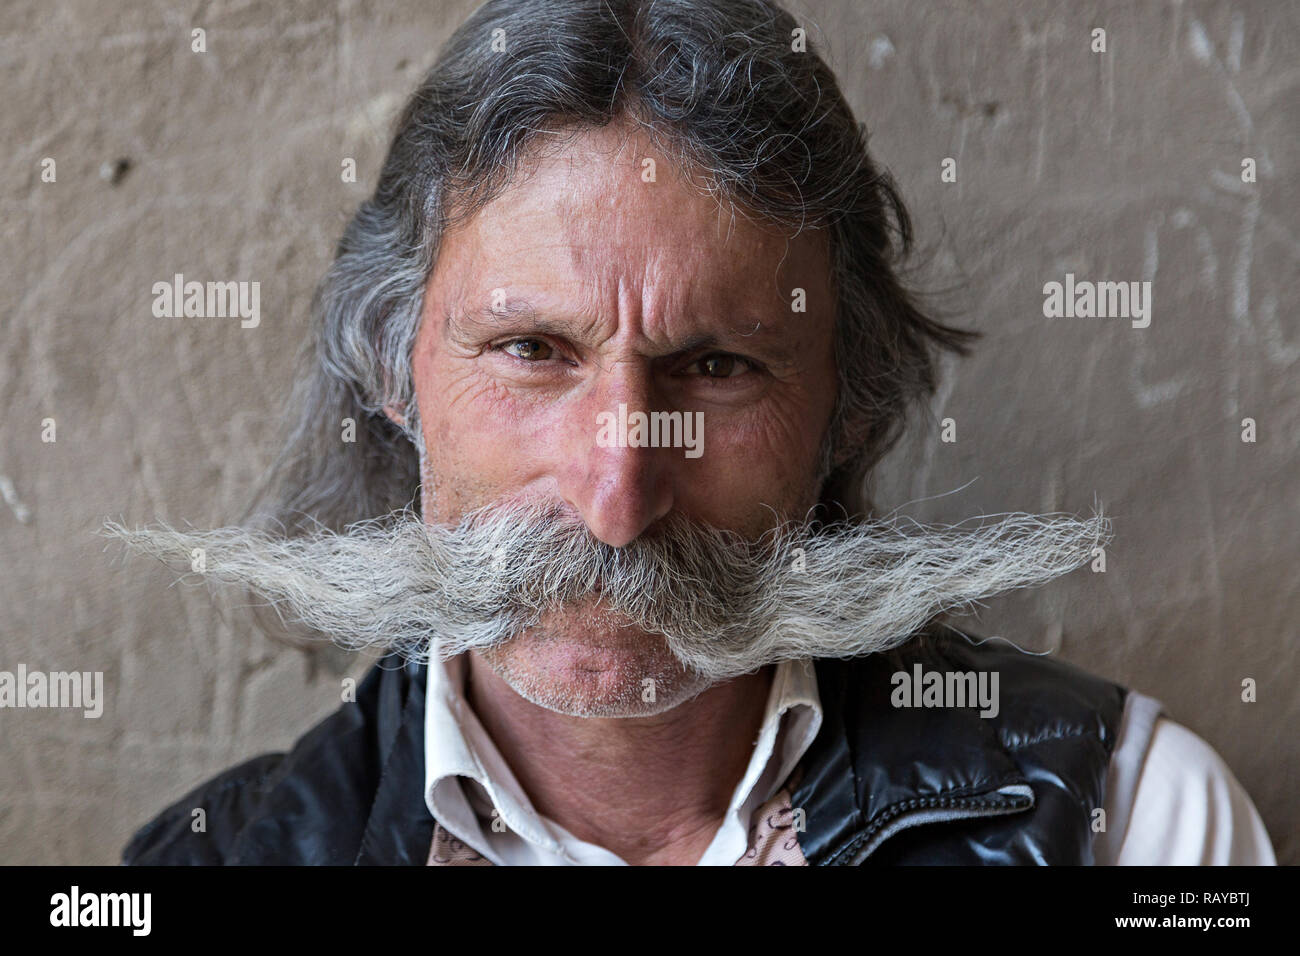 Hombre armenio con un gran bigote, en Ereván, Armenia. Foto de stock